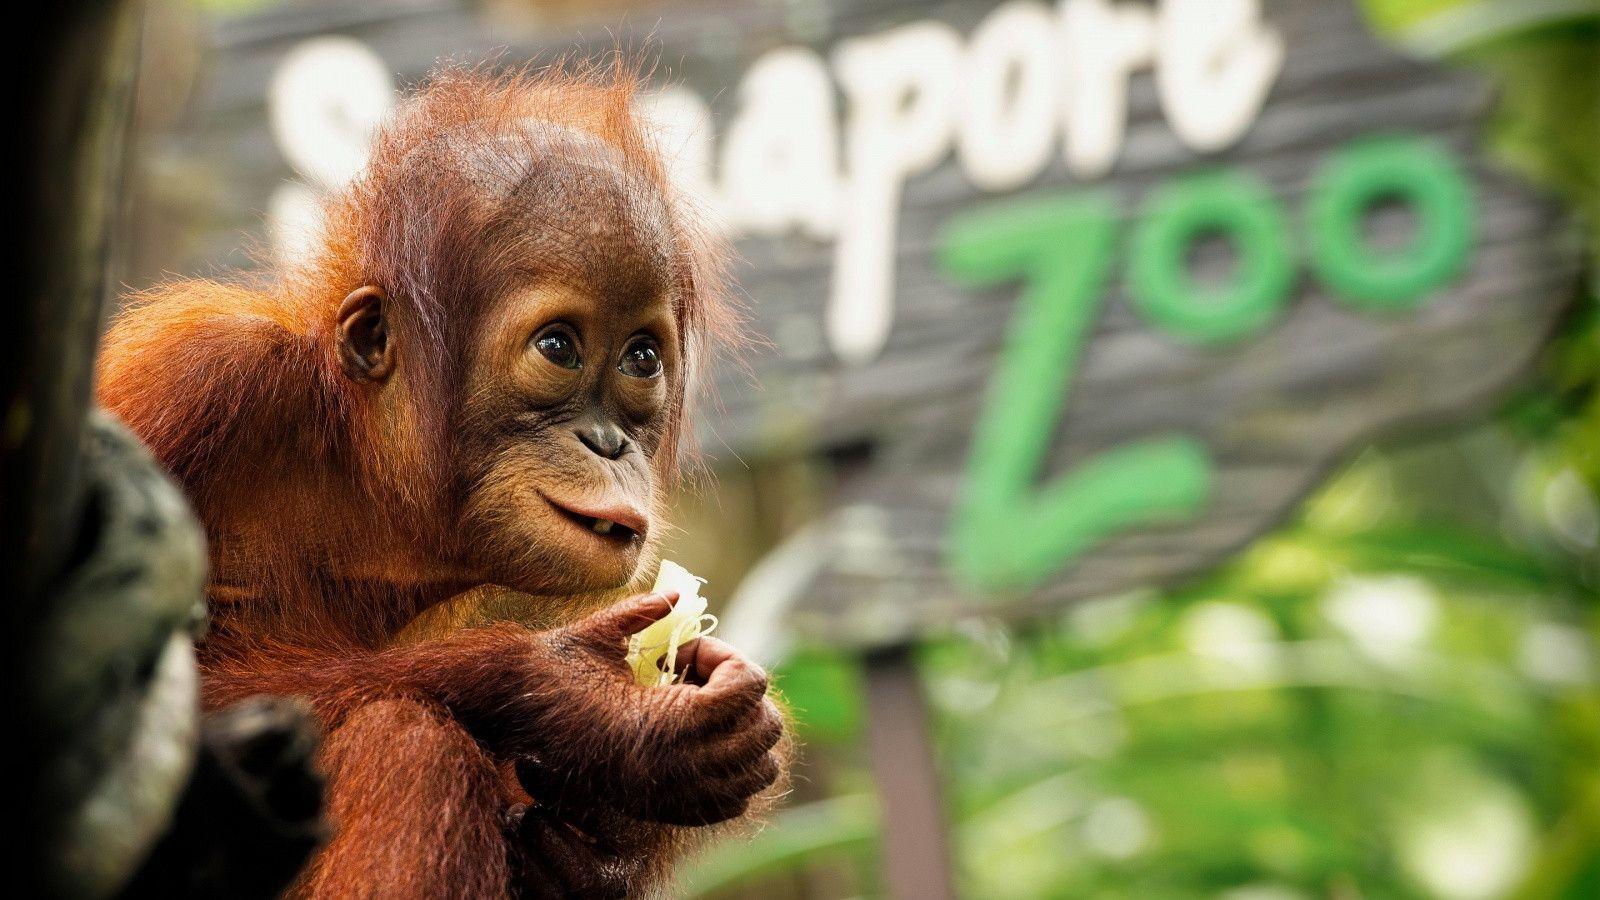 Baby Orangutan Wallpaper Image & Picture